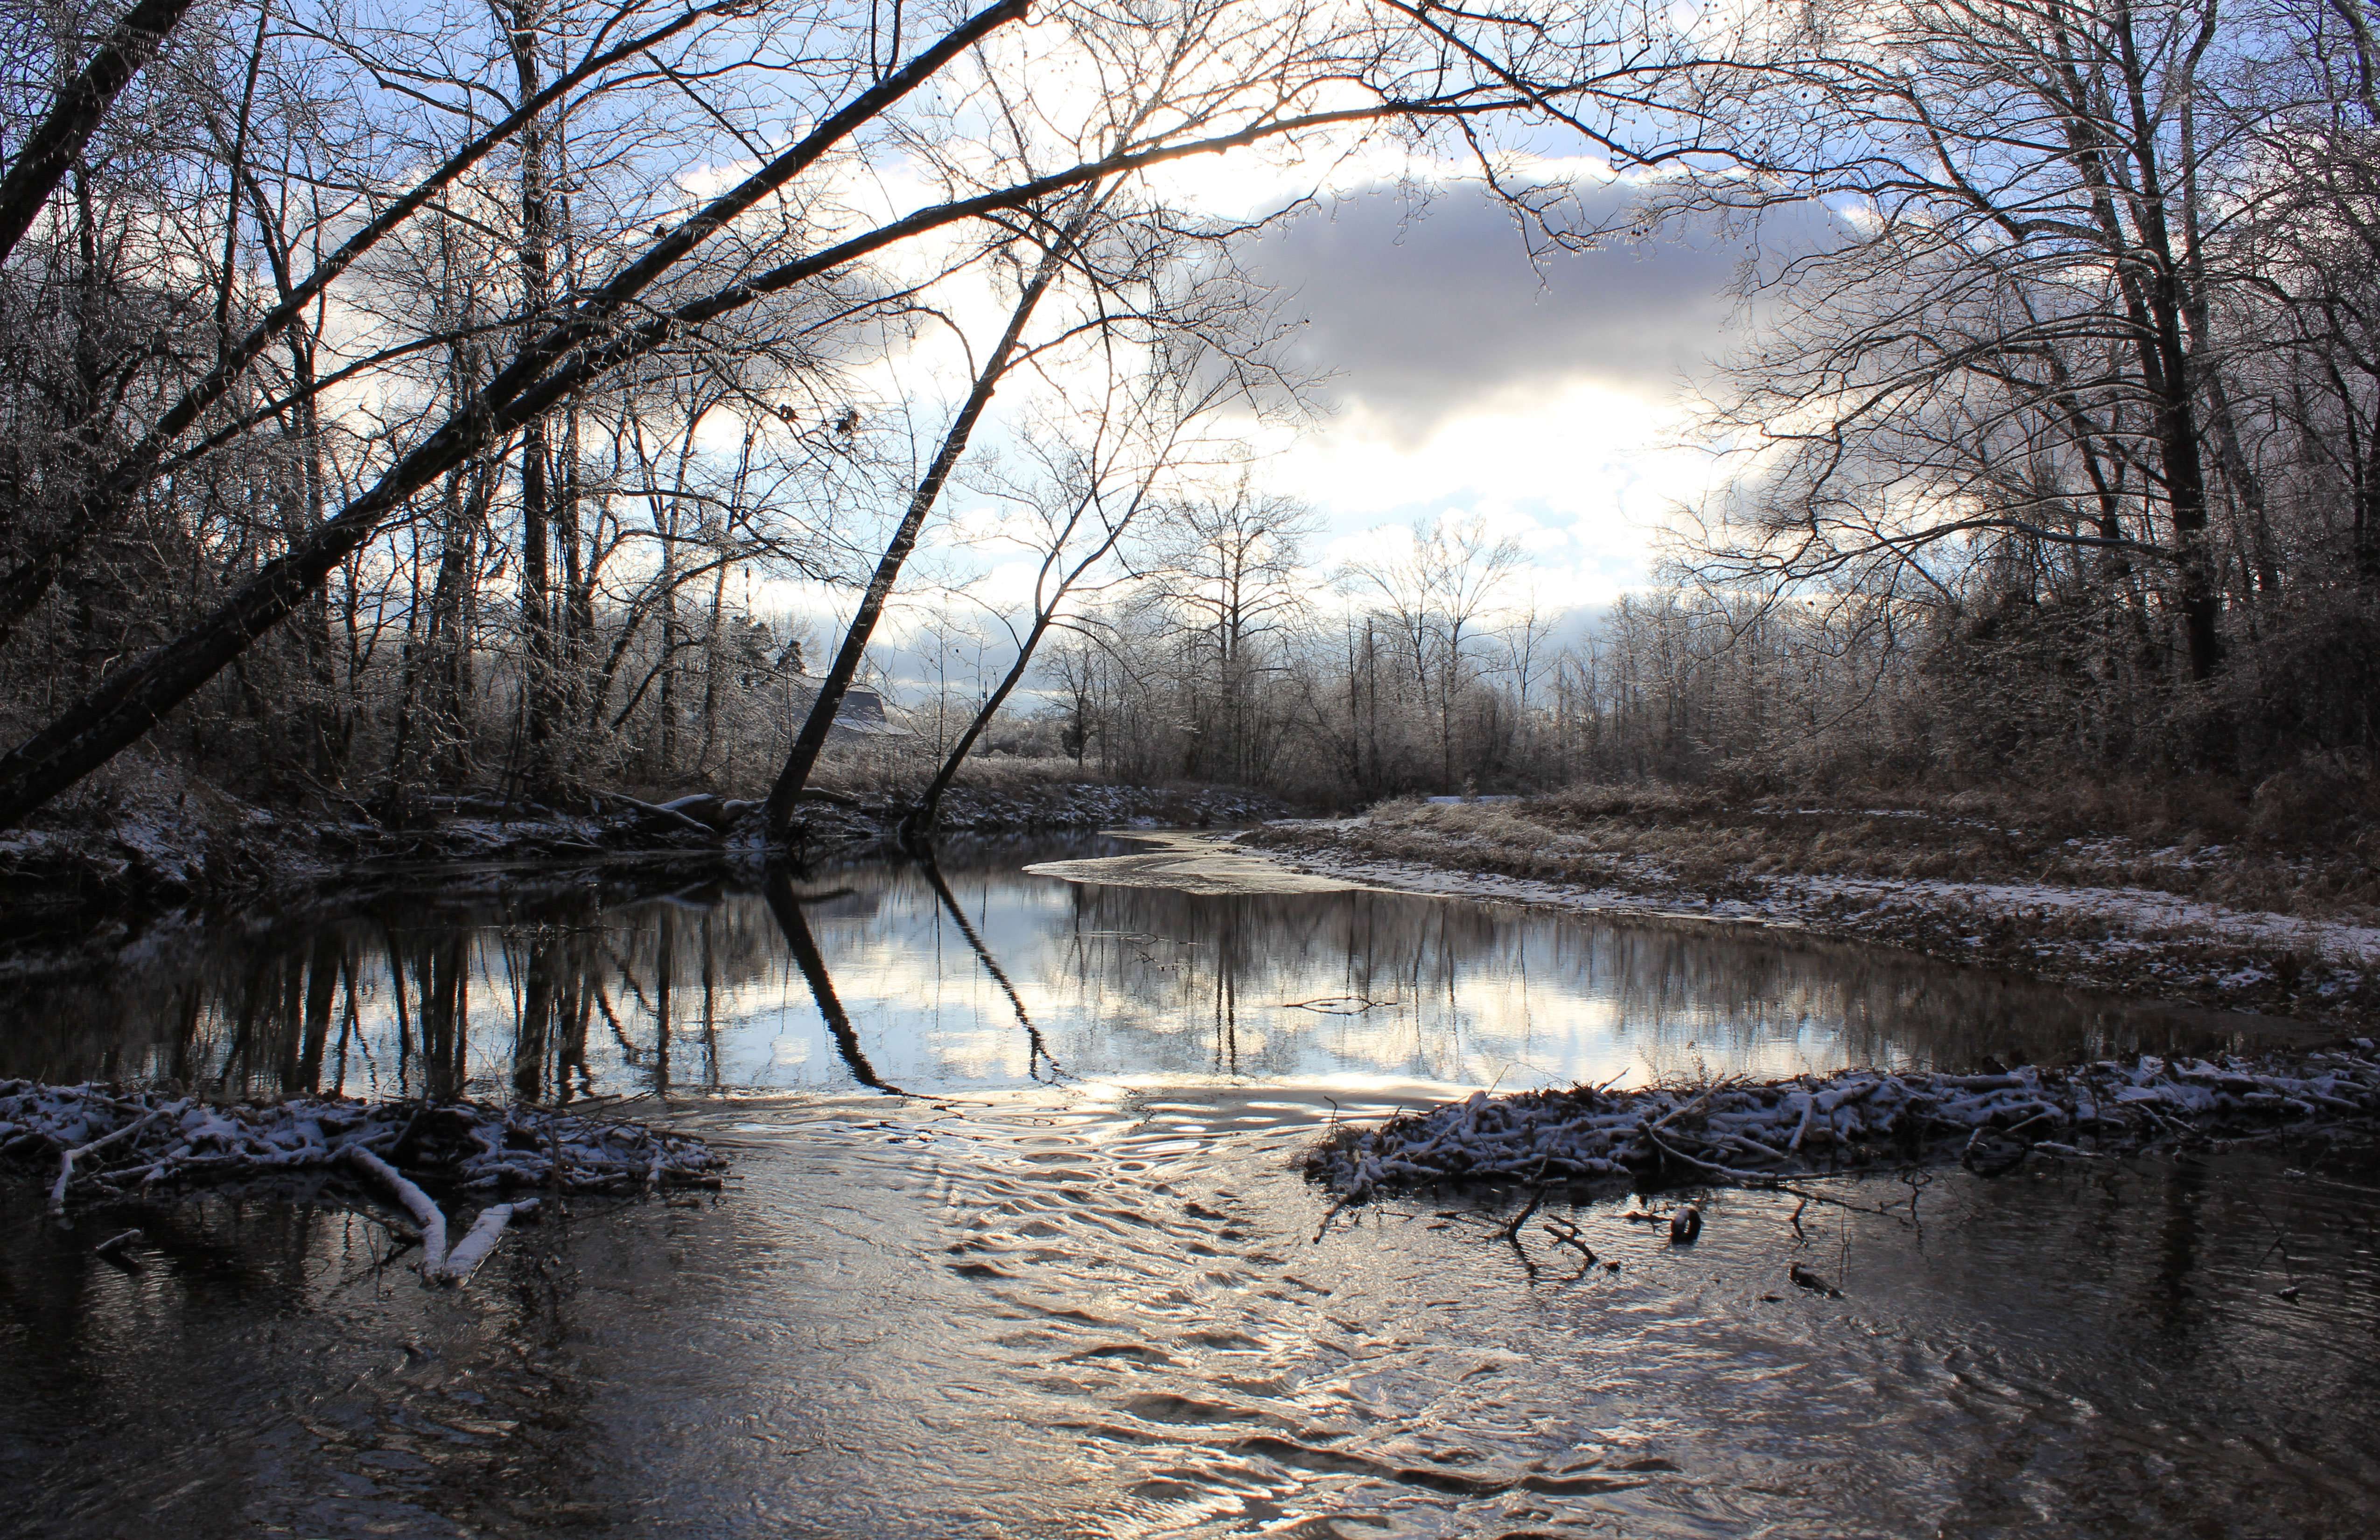 beaver dam on Ozark creek on icy January evening photo by Gail E Rowley Ozark Stream Photography